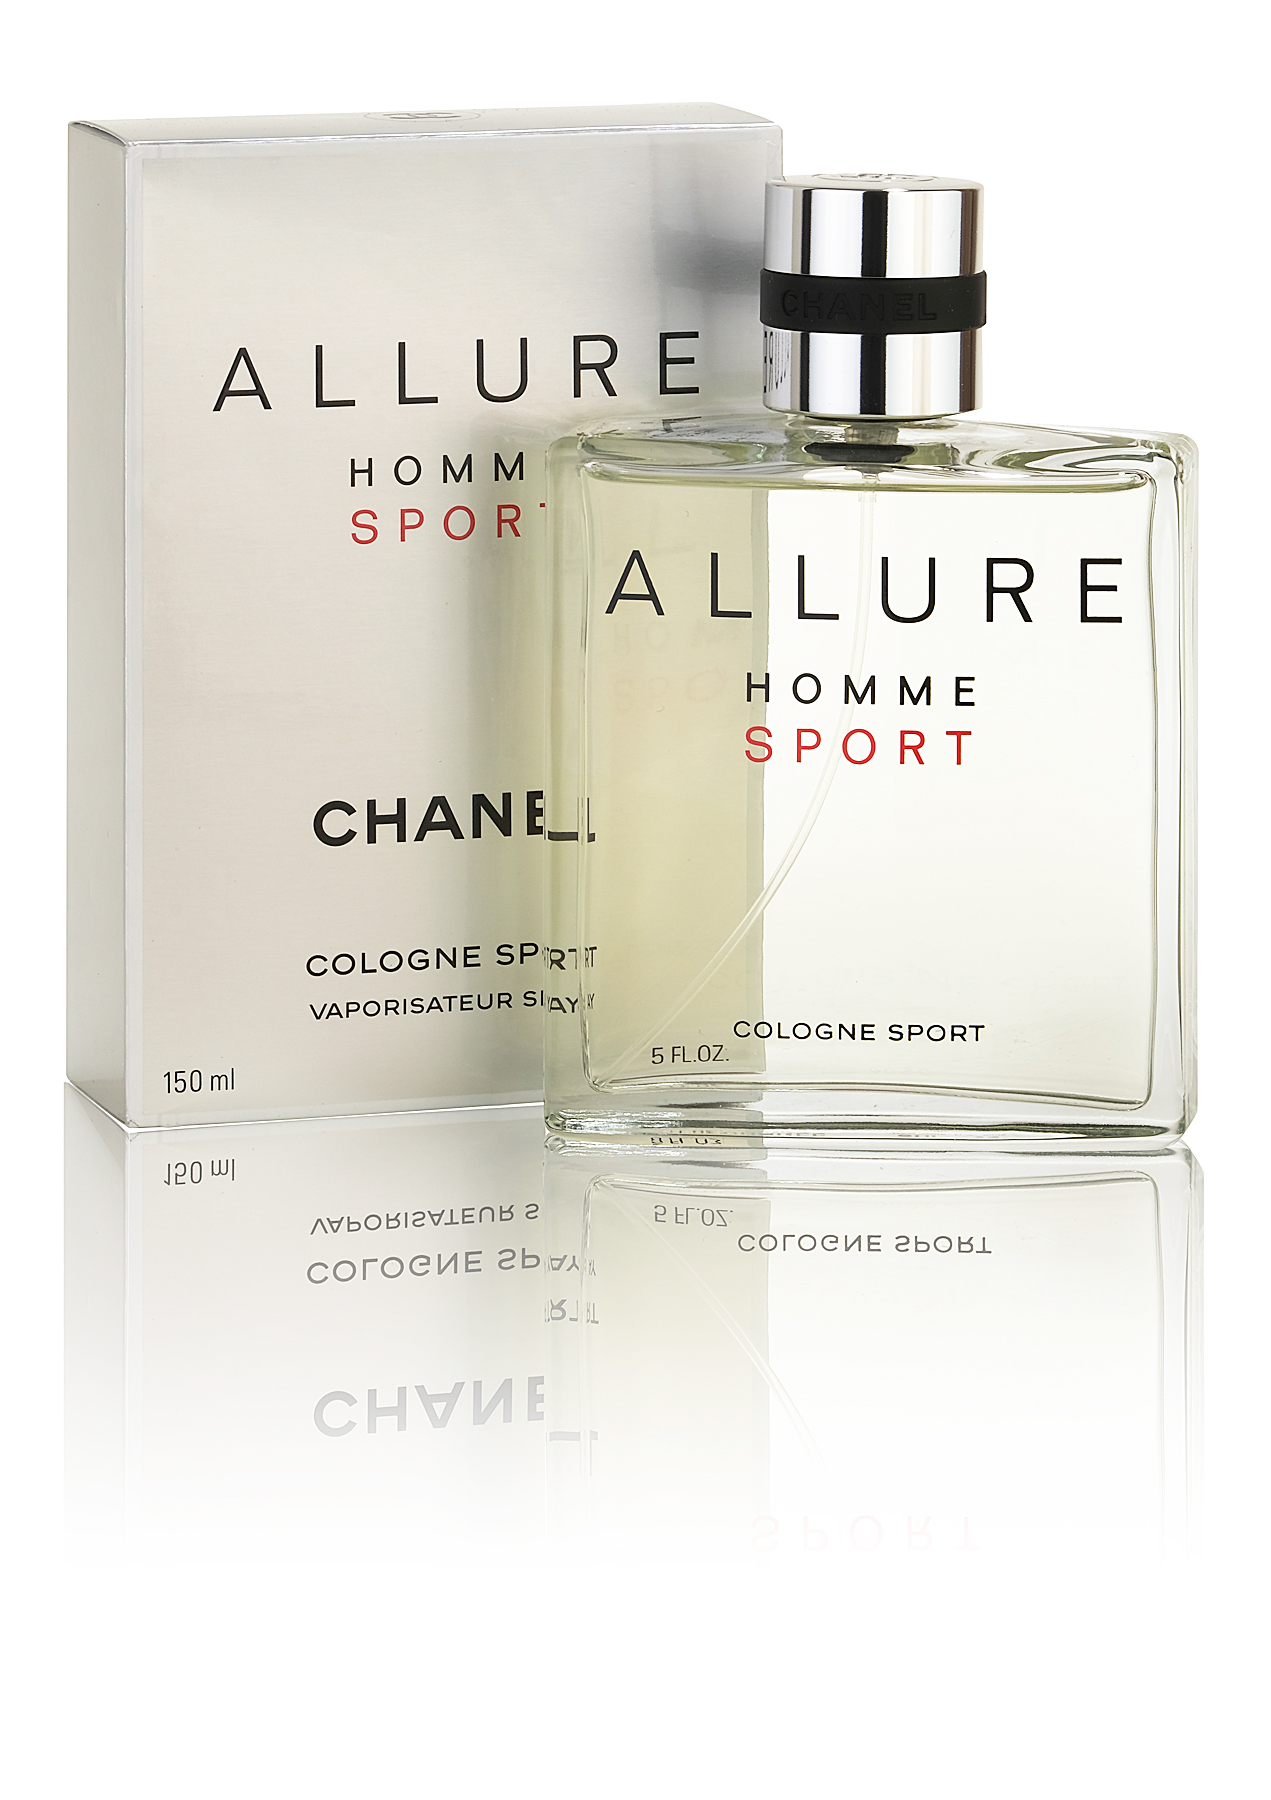 Chanel cologne sport. Спорт Алюр Шанель Аллюр. Chanel Allure homme Sport Cologne 100 ml. Chanel Allure homme Sport. Chanel Allure Sport Cologne.